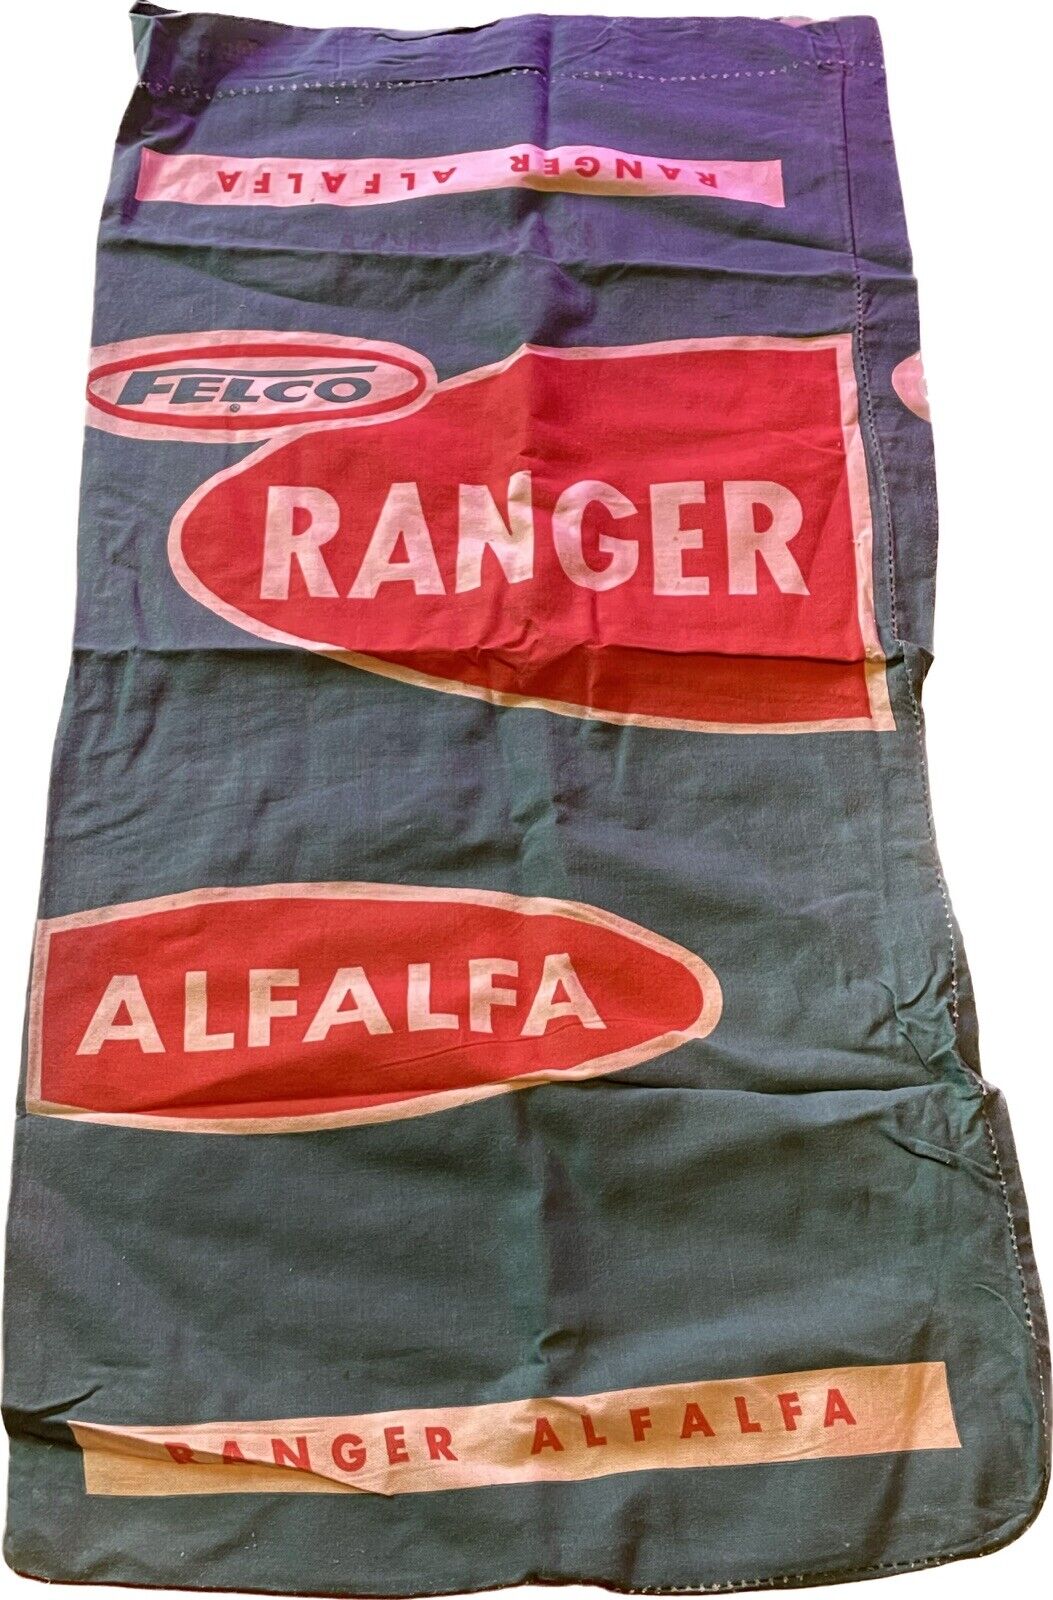 FELCO RANGER ALFALFA Vintage Seed Farmer Bag Double Sided w/Logo RARE Americana